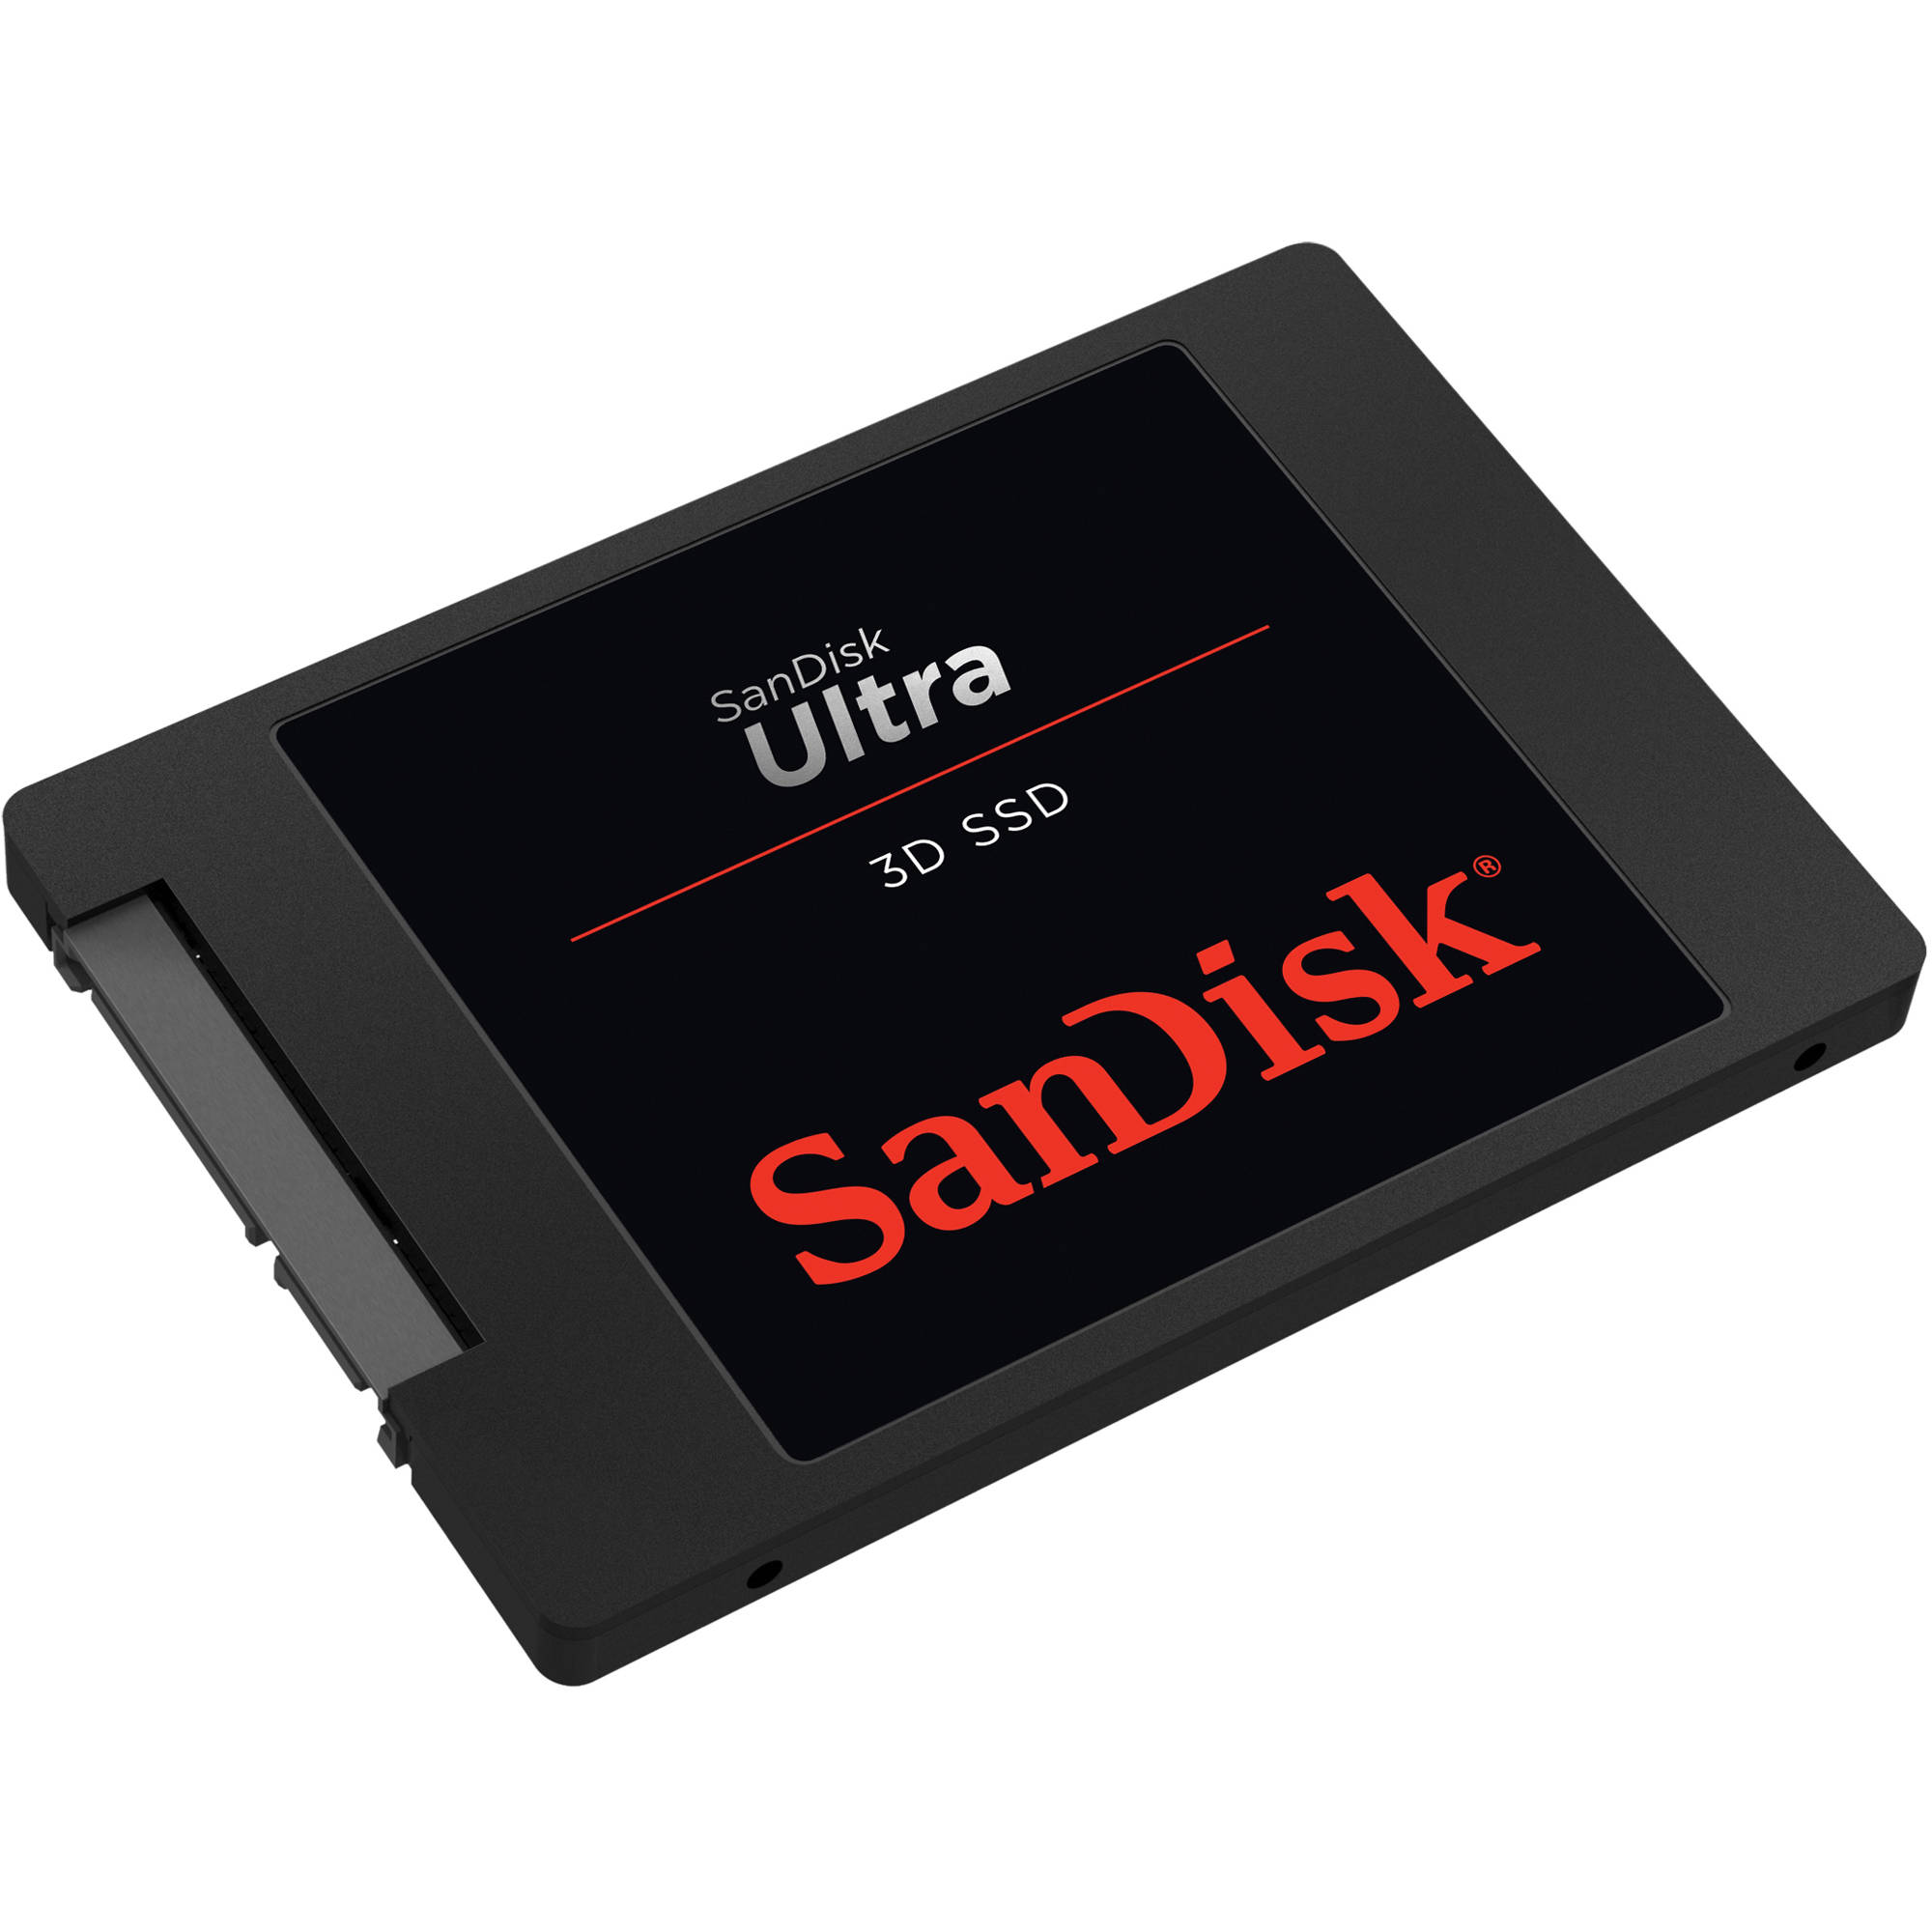 SanDisk 500GB 3D SATA III 2.5" Internal